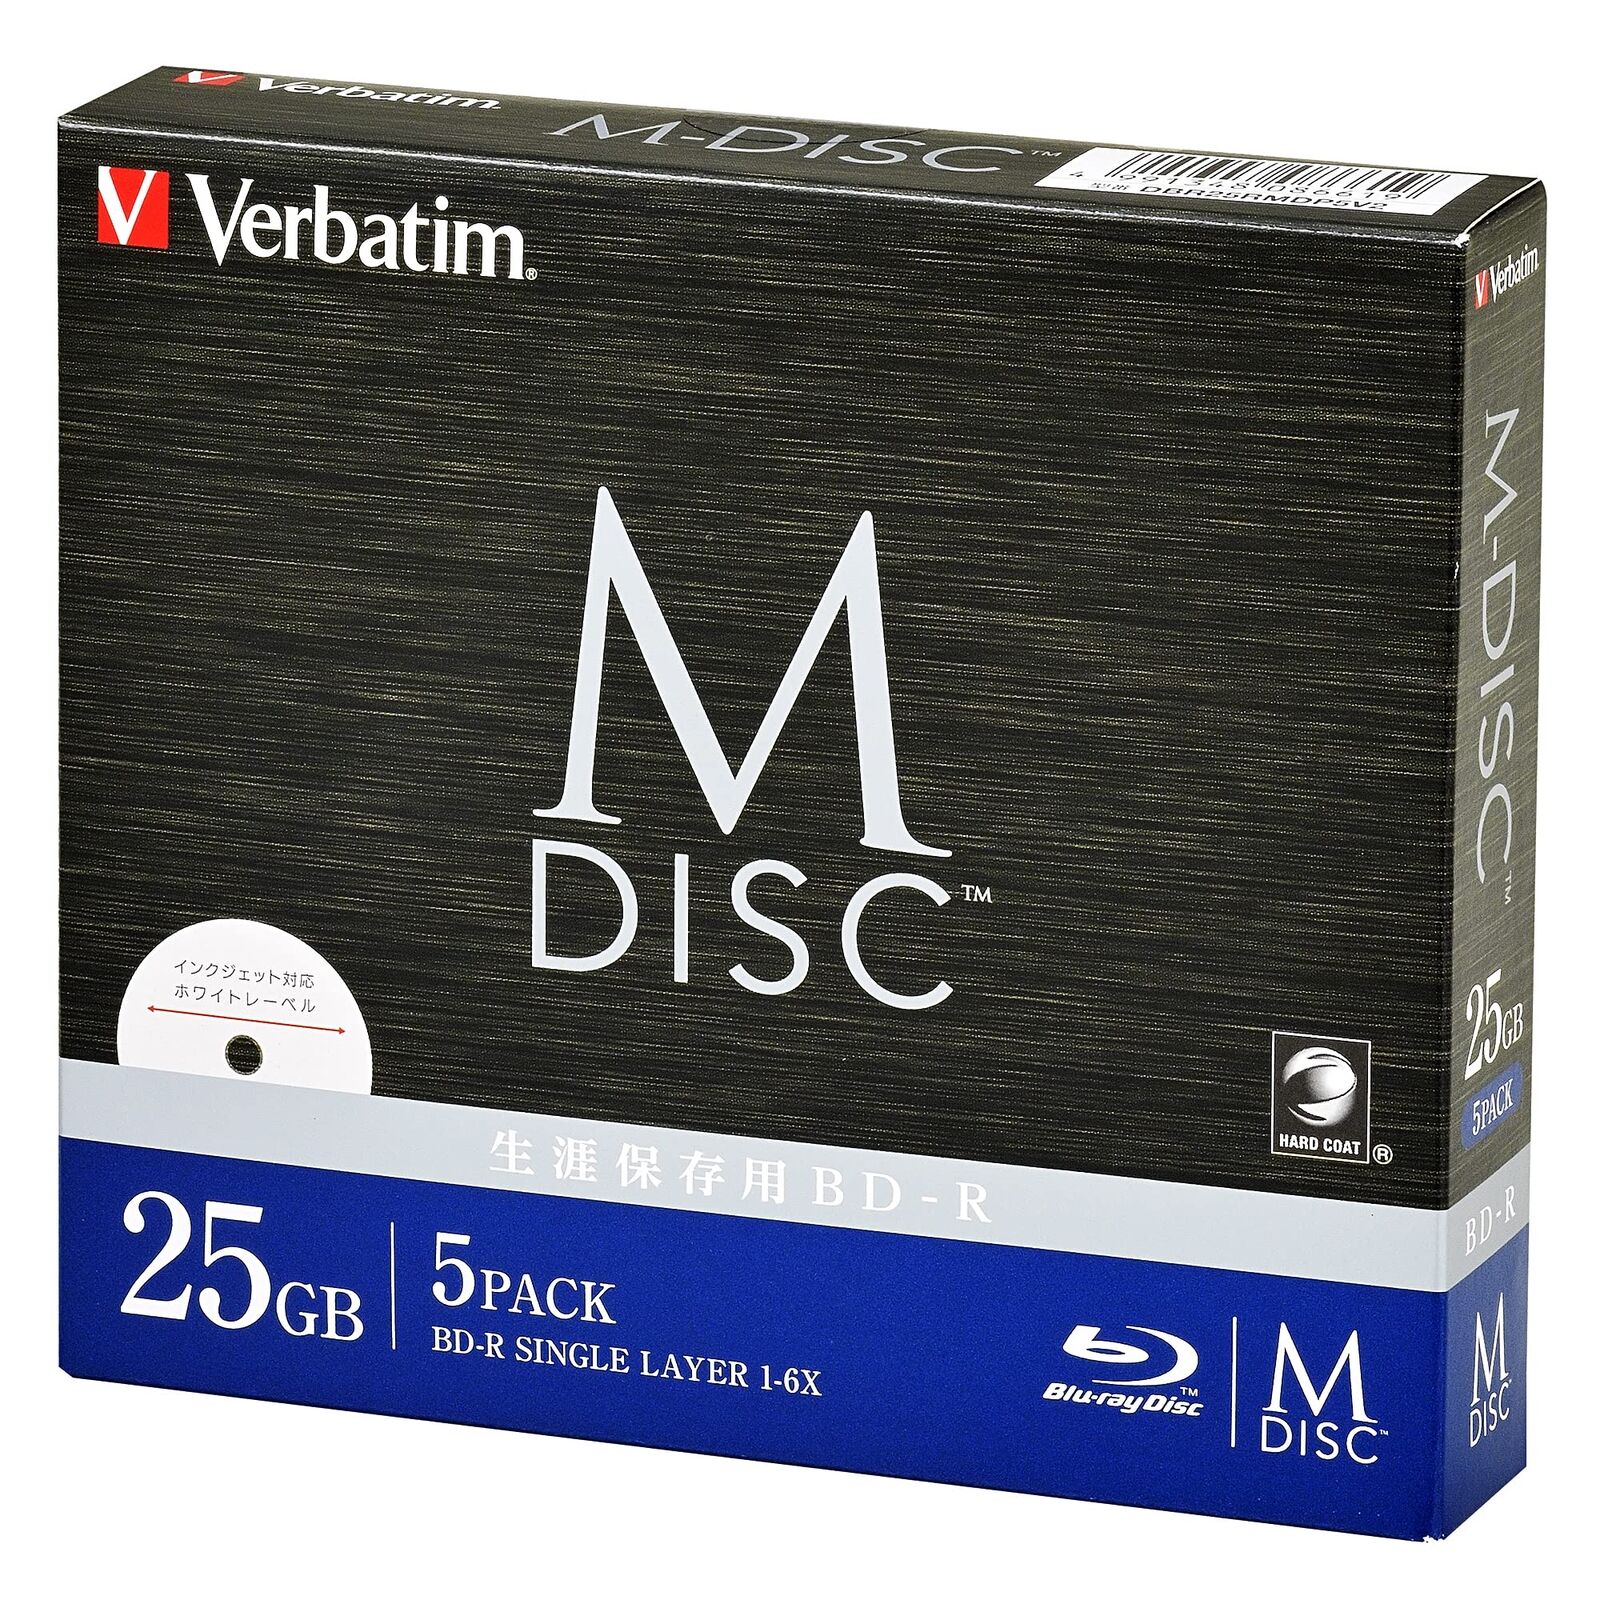 Verbatim M-DISC BD-R for 1-time recording, 1-6x speed, 25GB, 5 discs